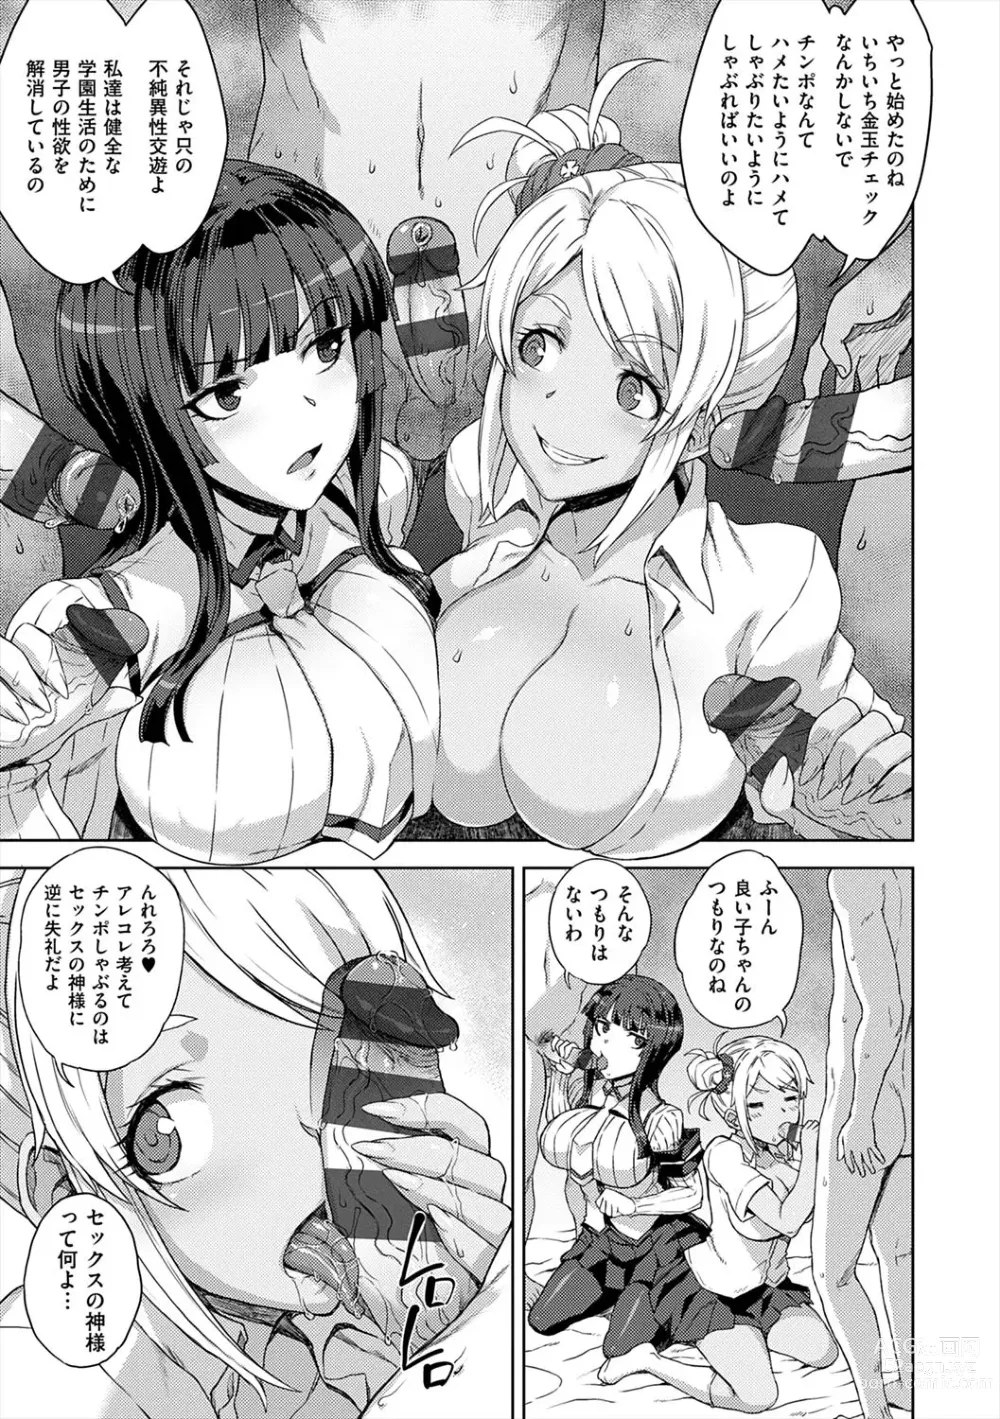 Page 15 of manga Marble Girls